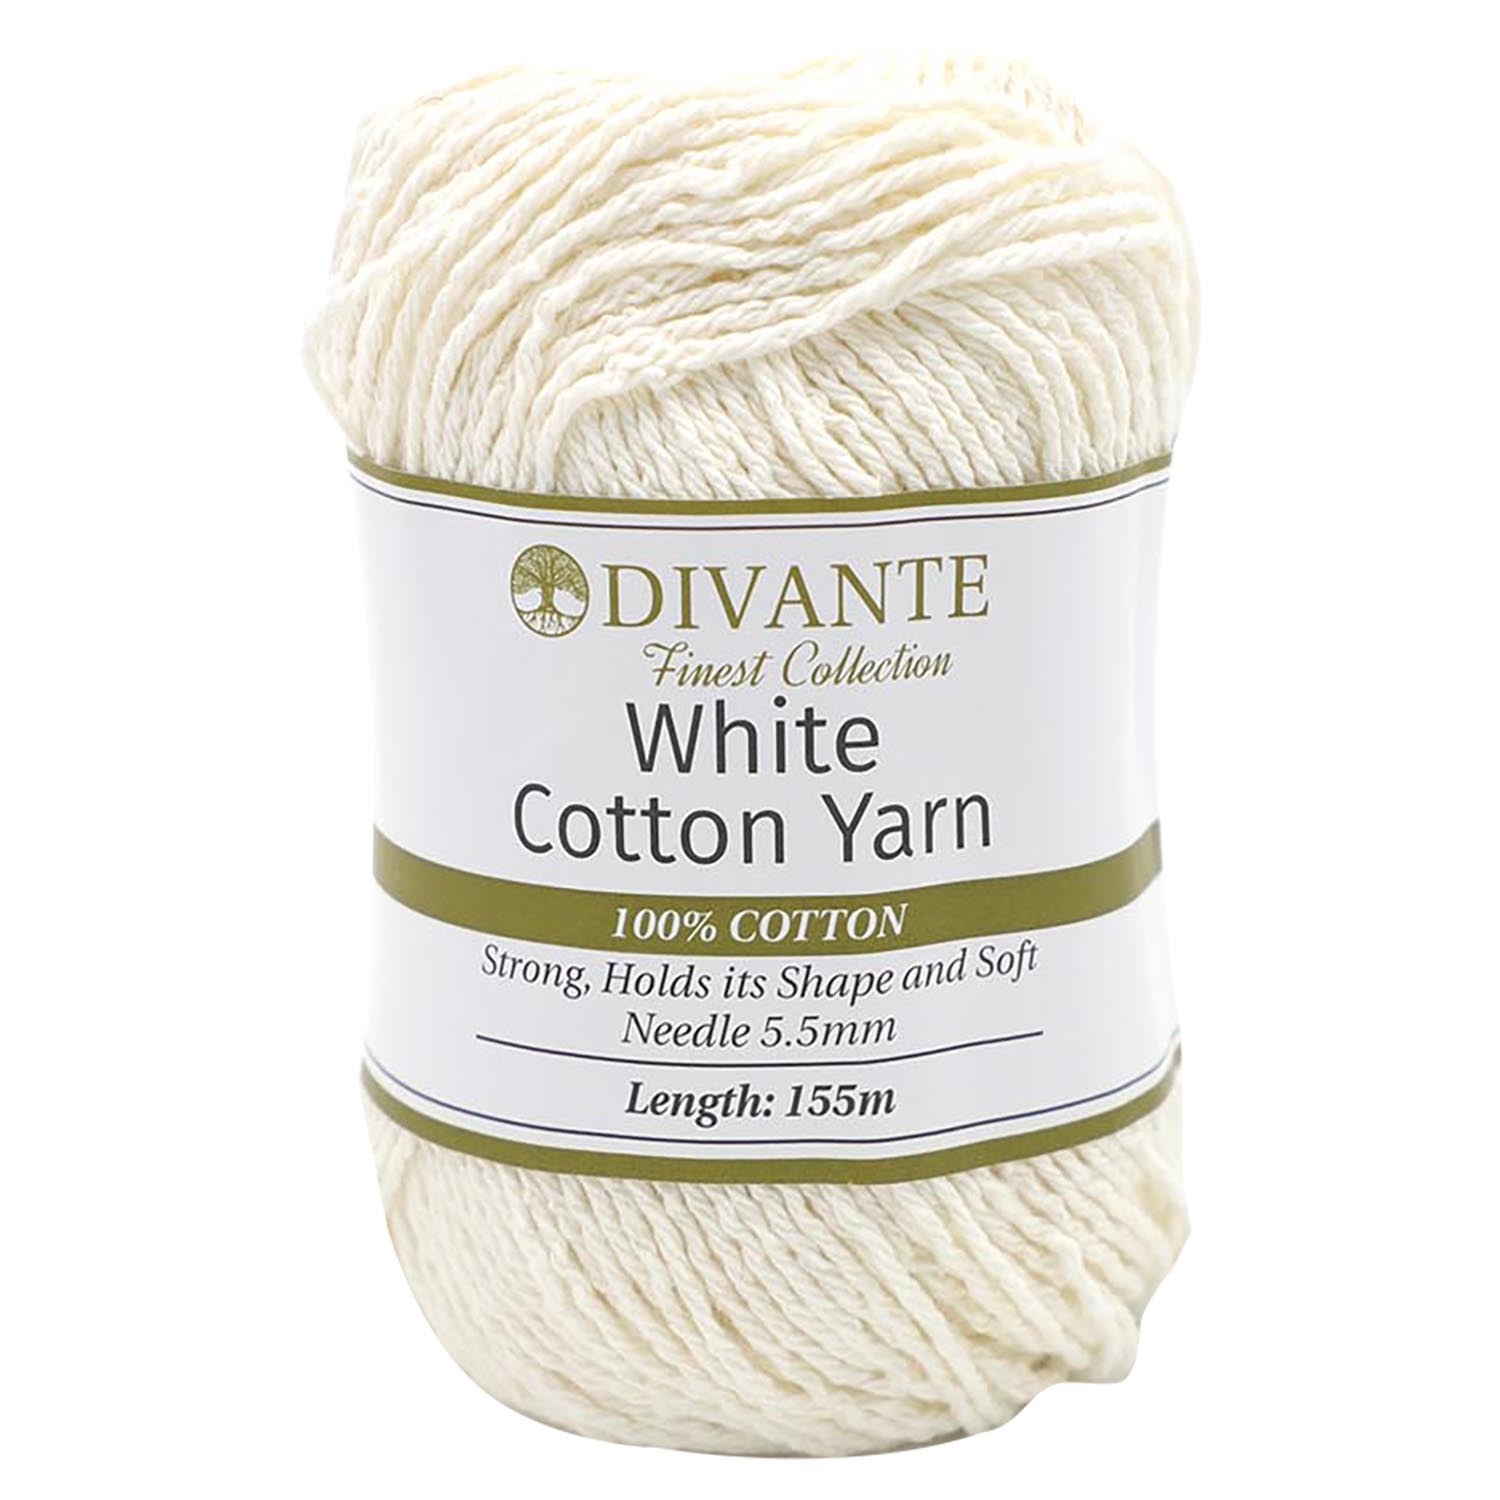 Divante White Yarn Image